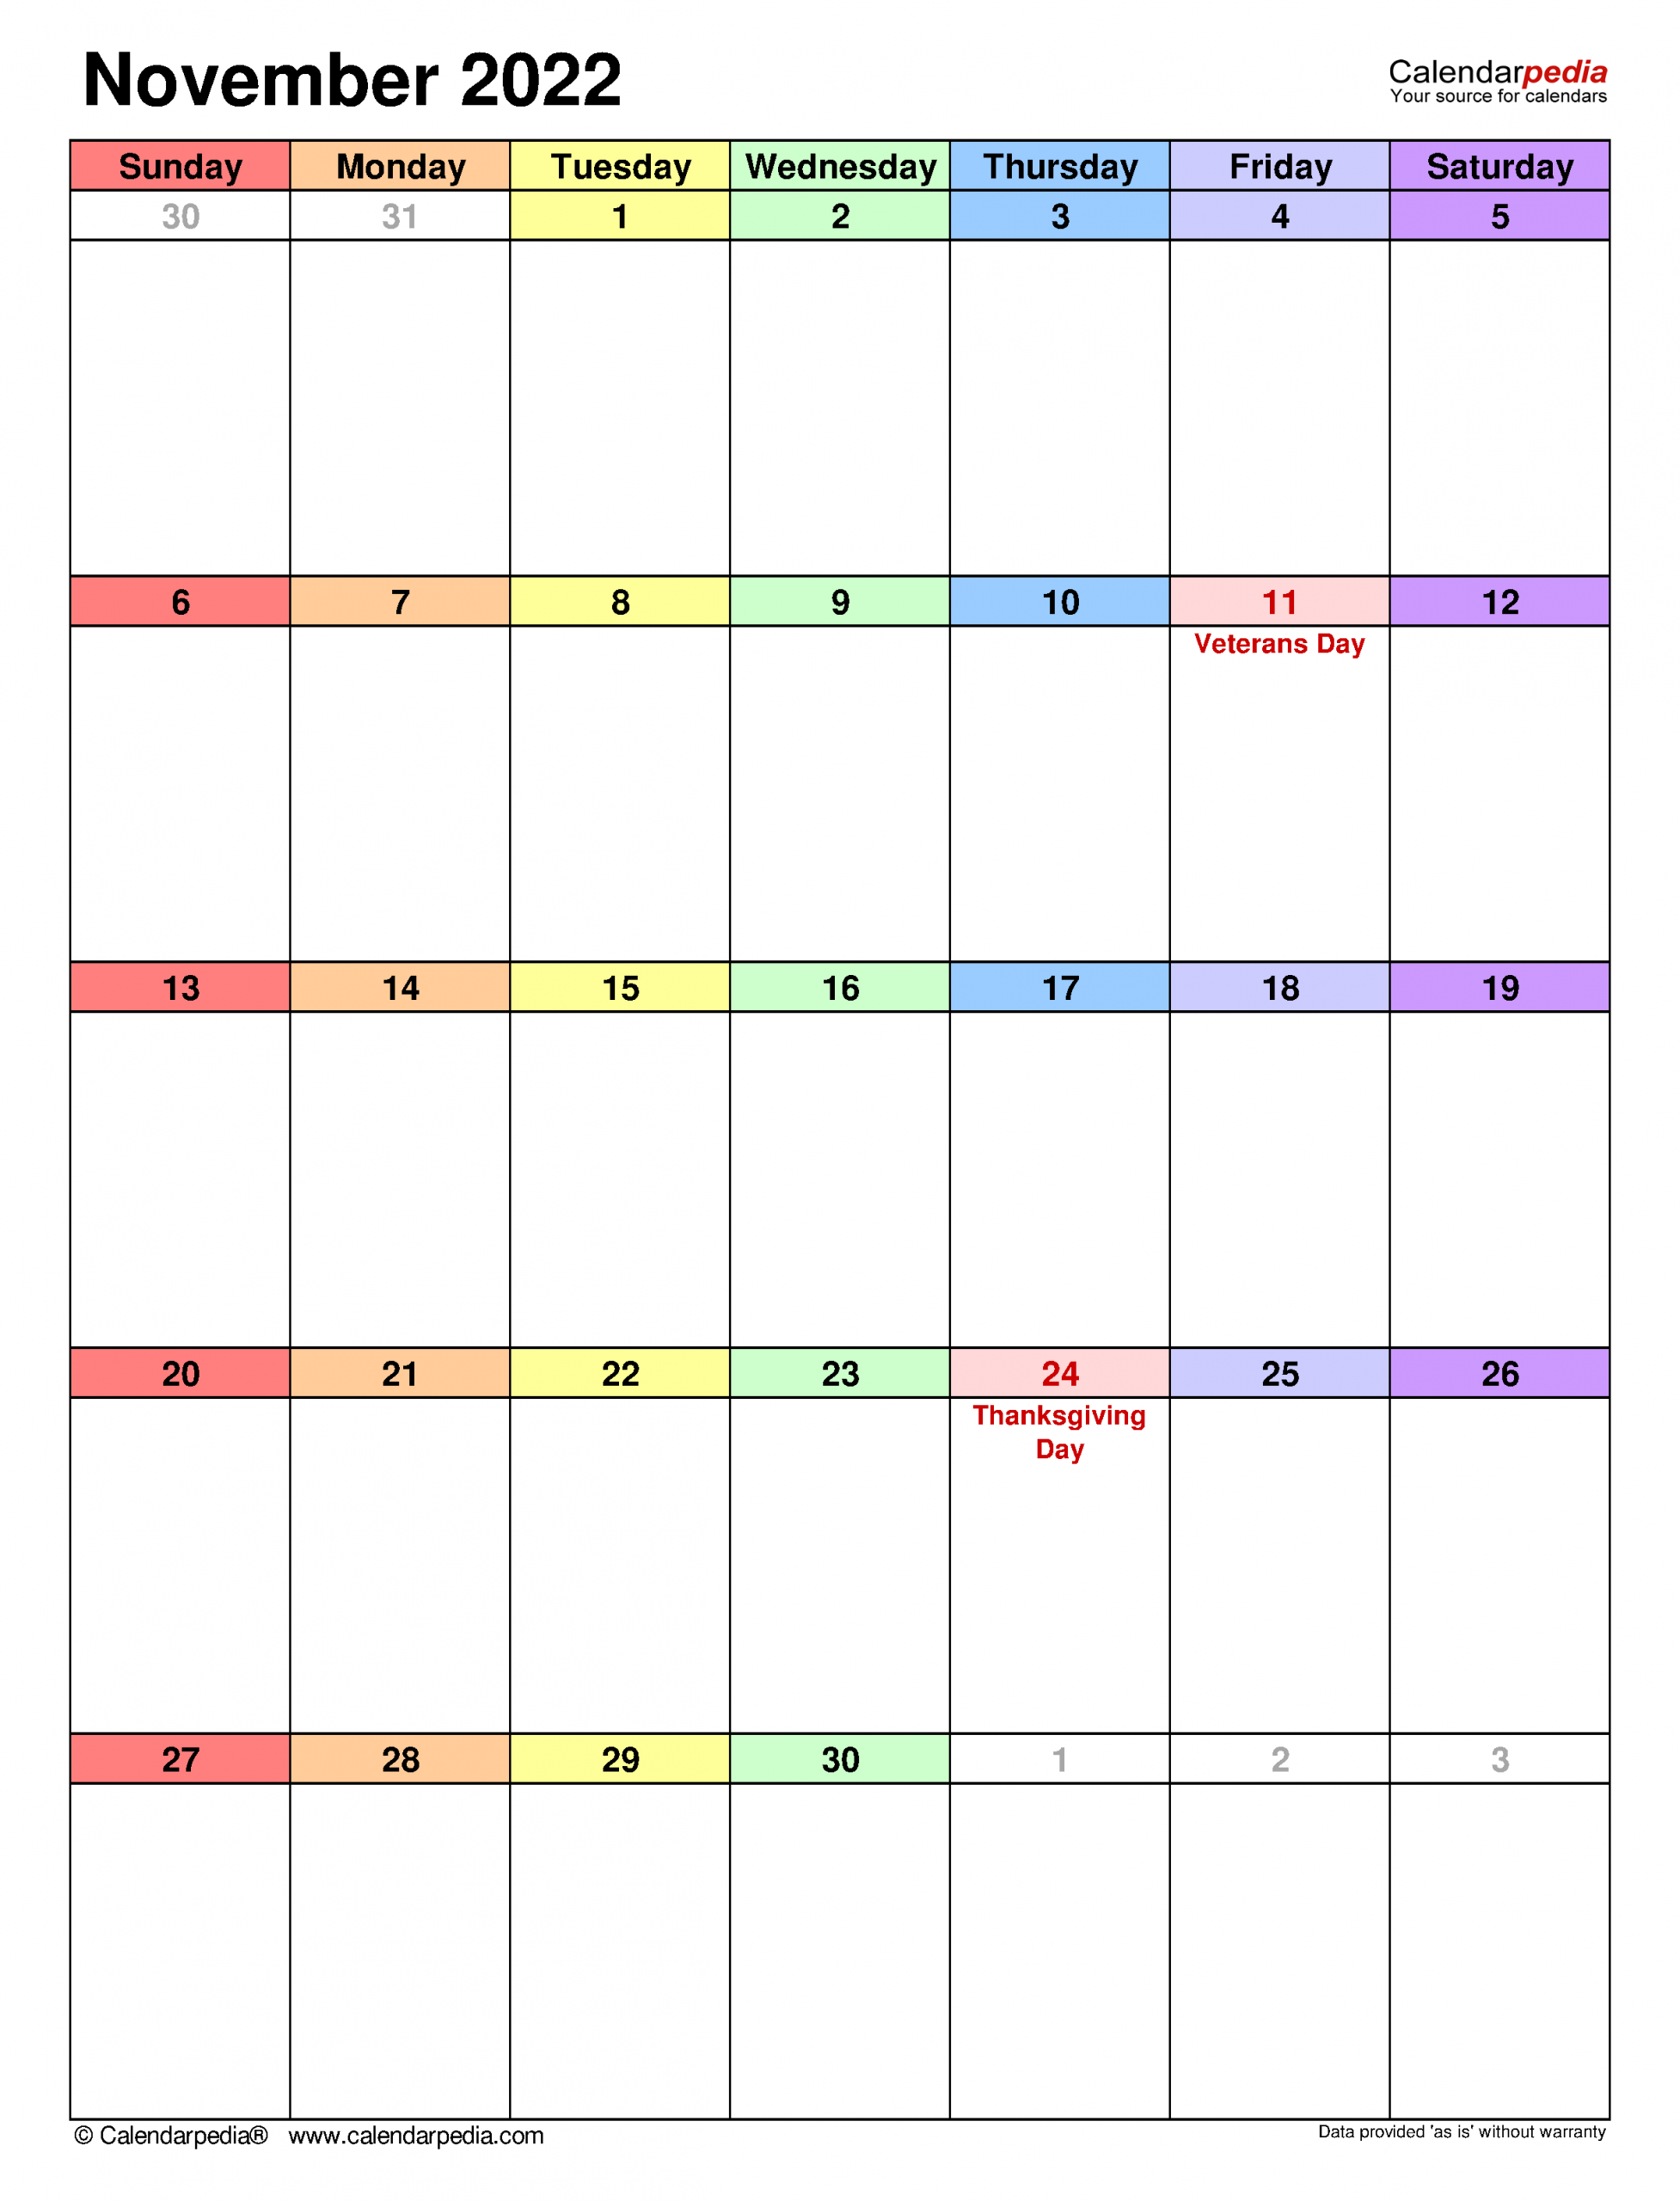 November 2022 Calendar | Templates For Word, Excel And Pdf November December 2022 Calendar